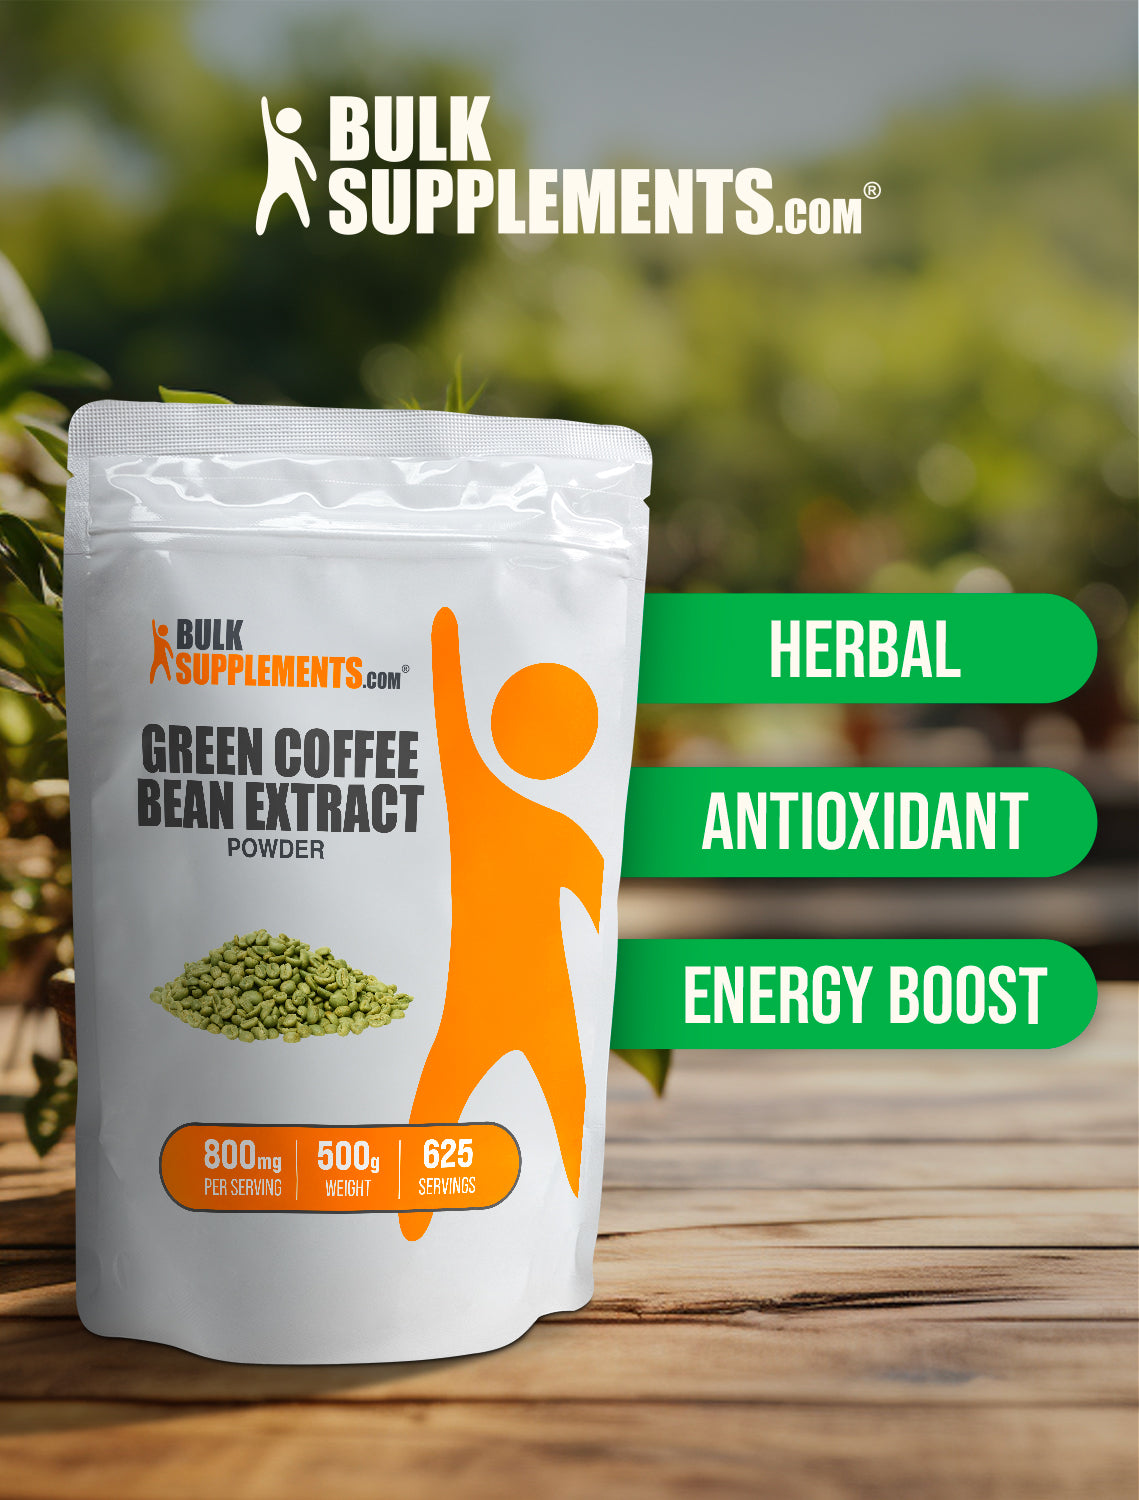 Green Coffee Bean extract powder keyword image 500g